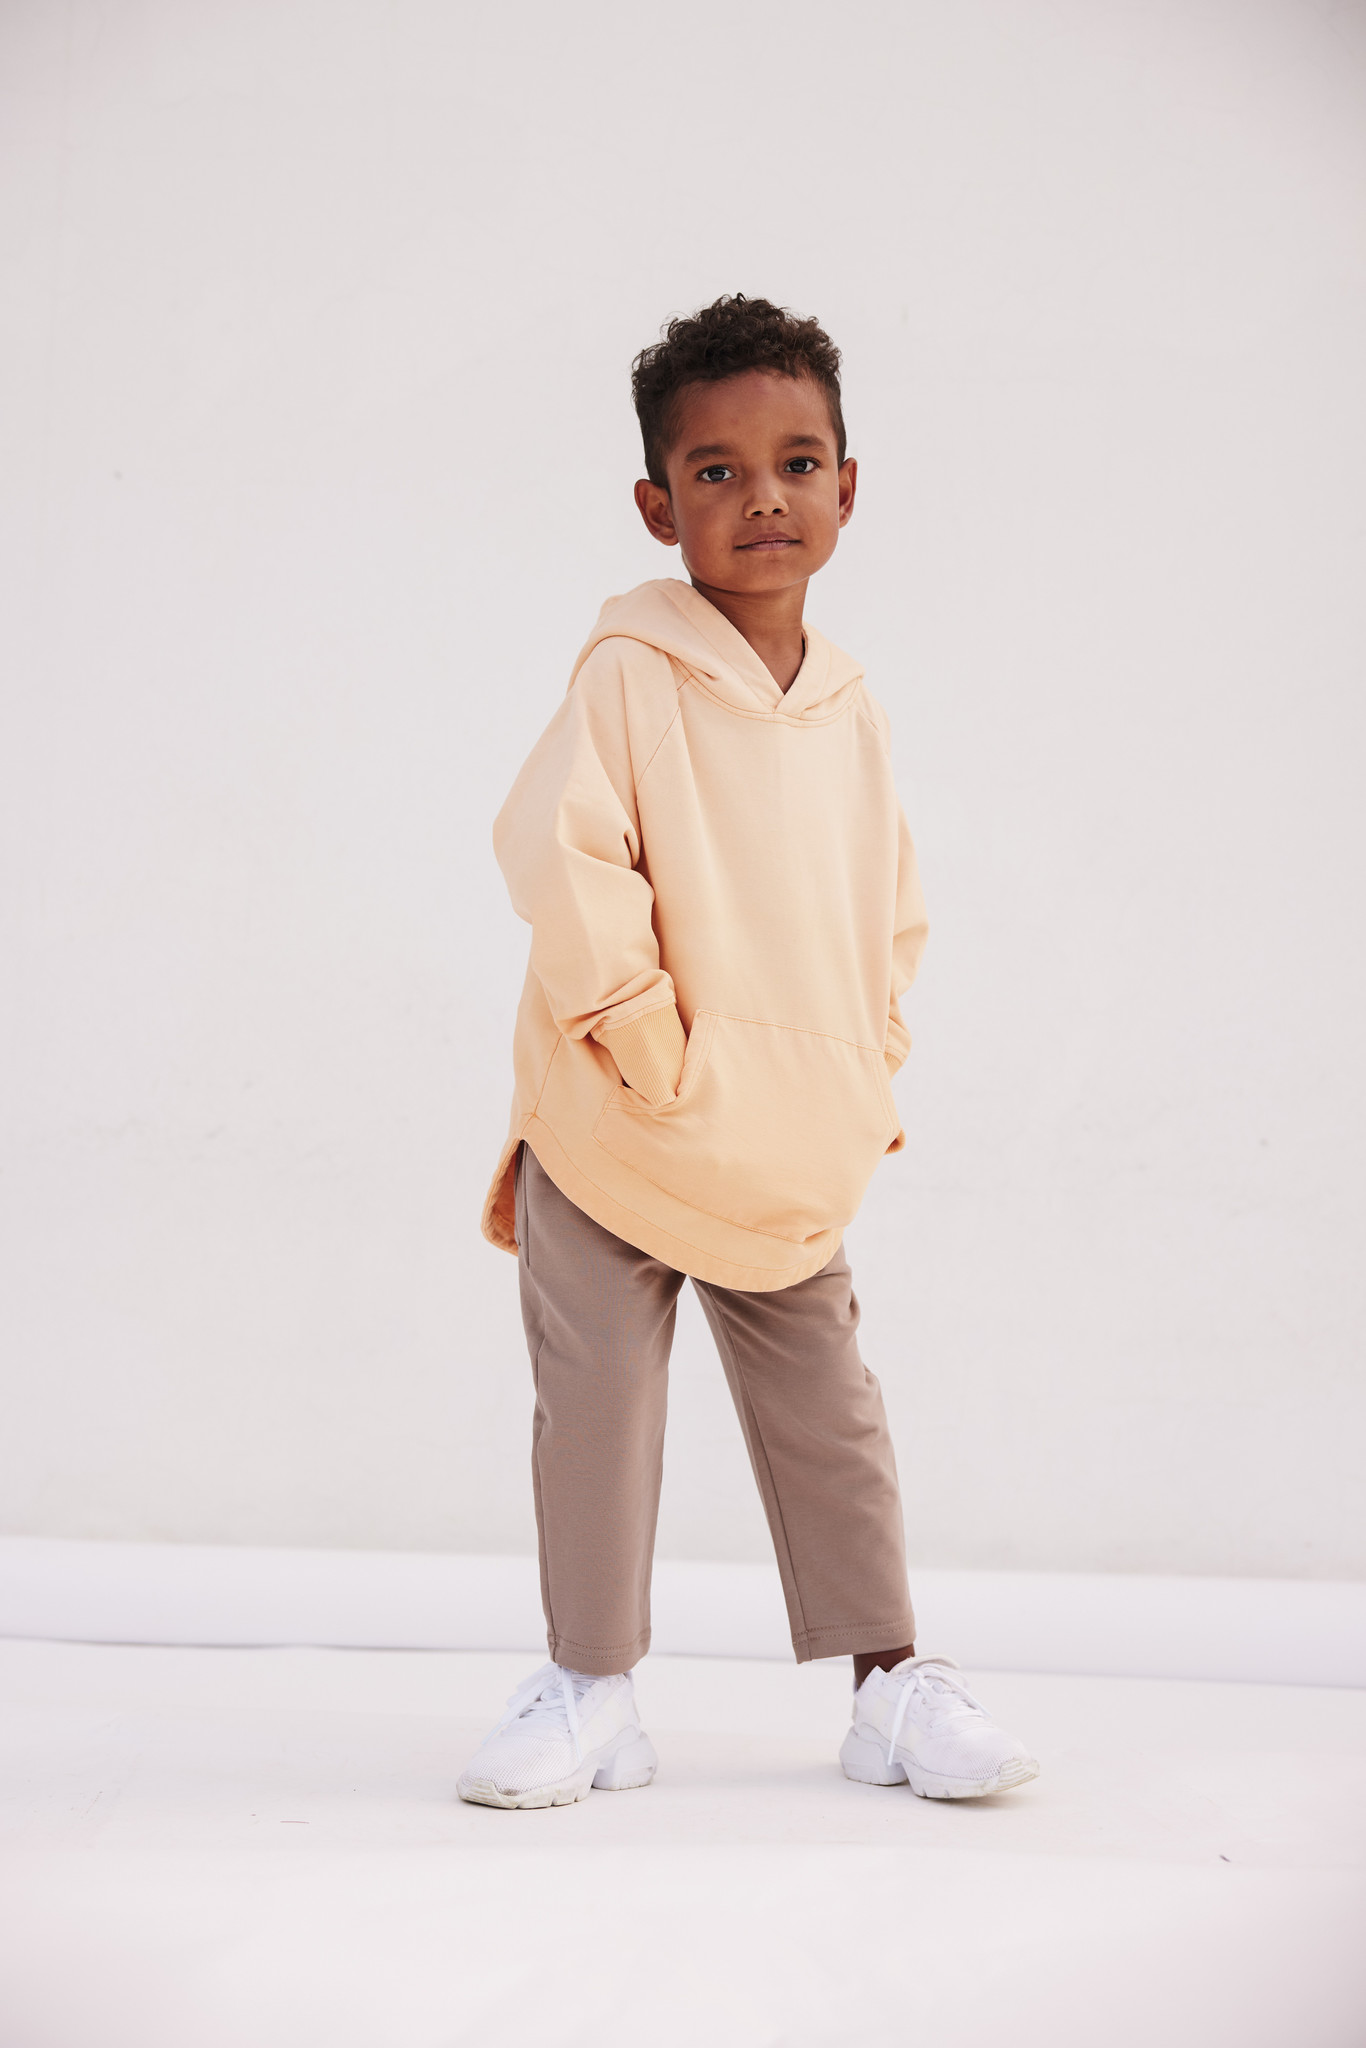 Minikid ORANGE SWEATER | HOODIE WITH DIP DYE PRINT | COOL CHILDREN'S CLOTHING